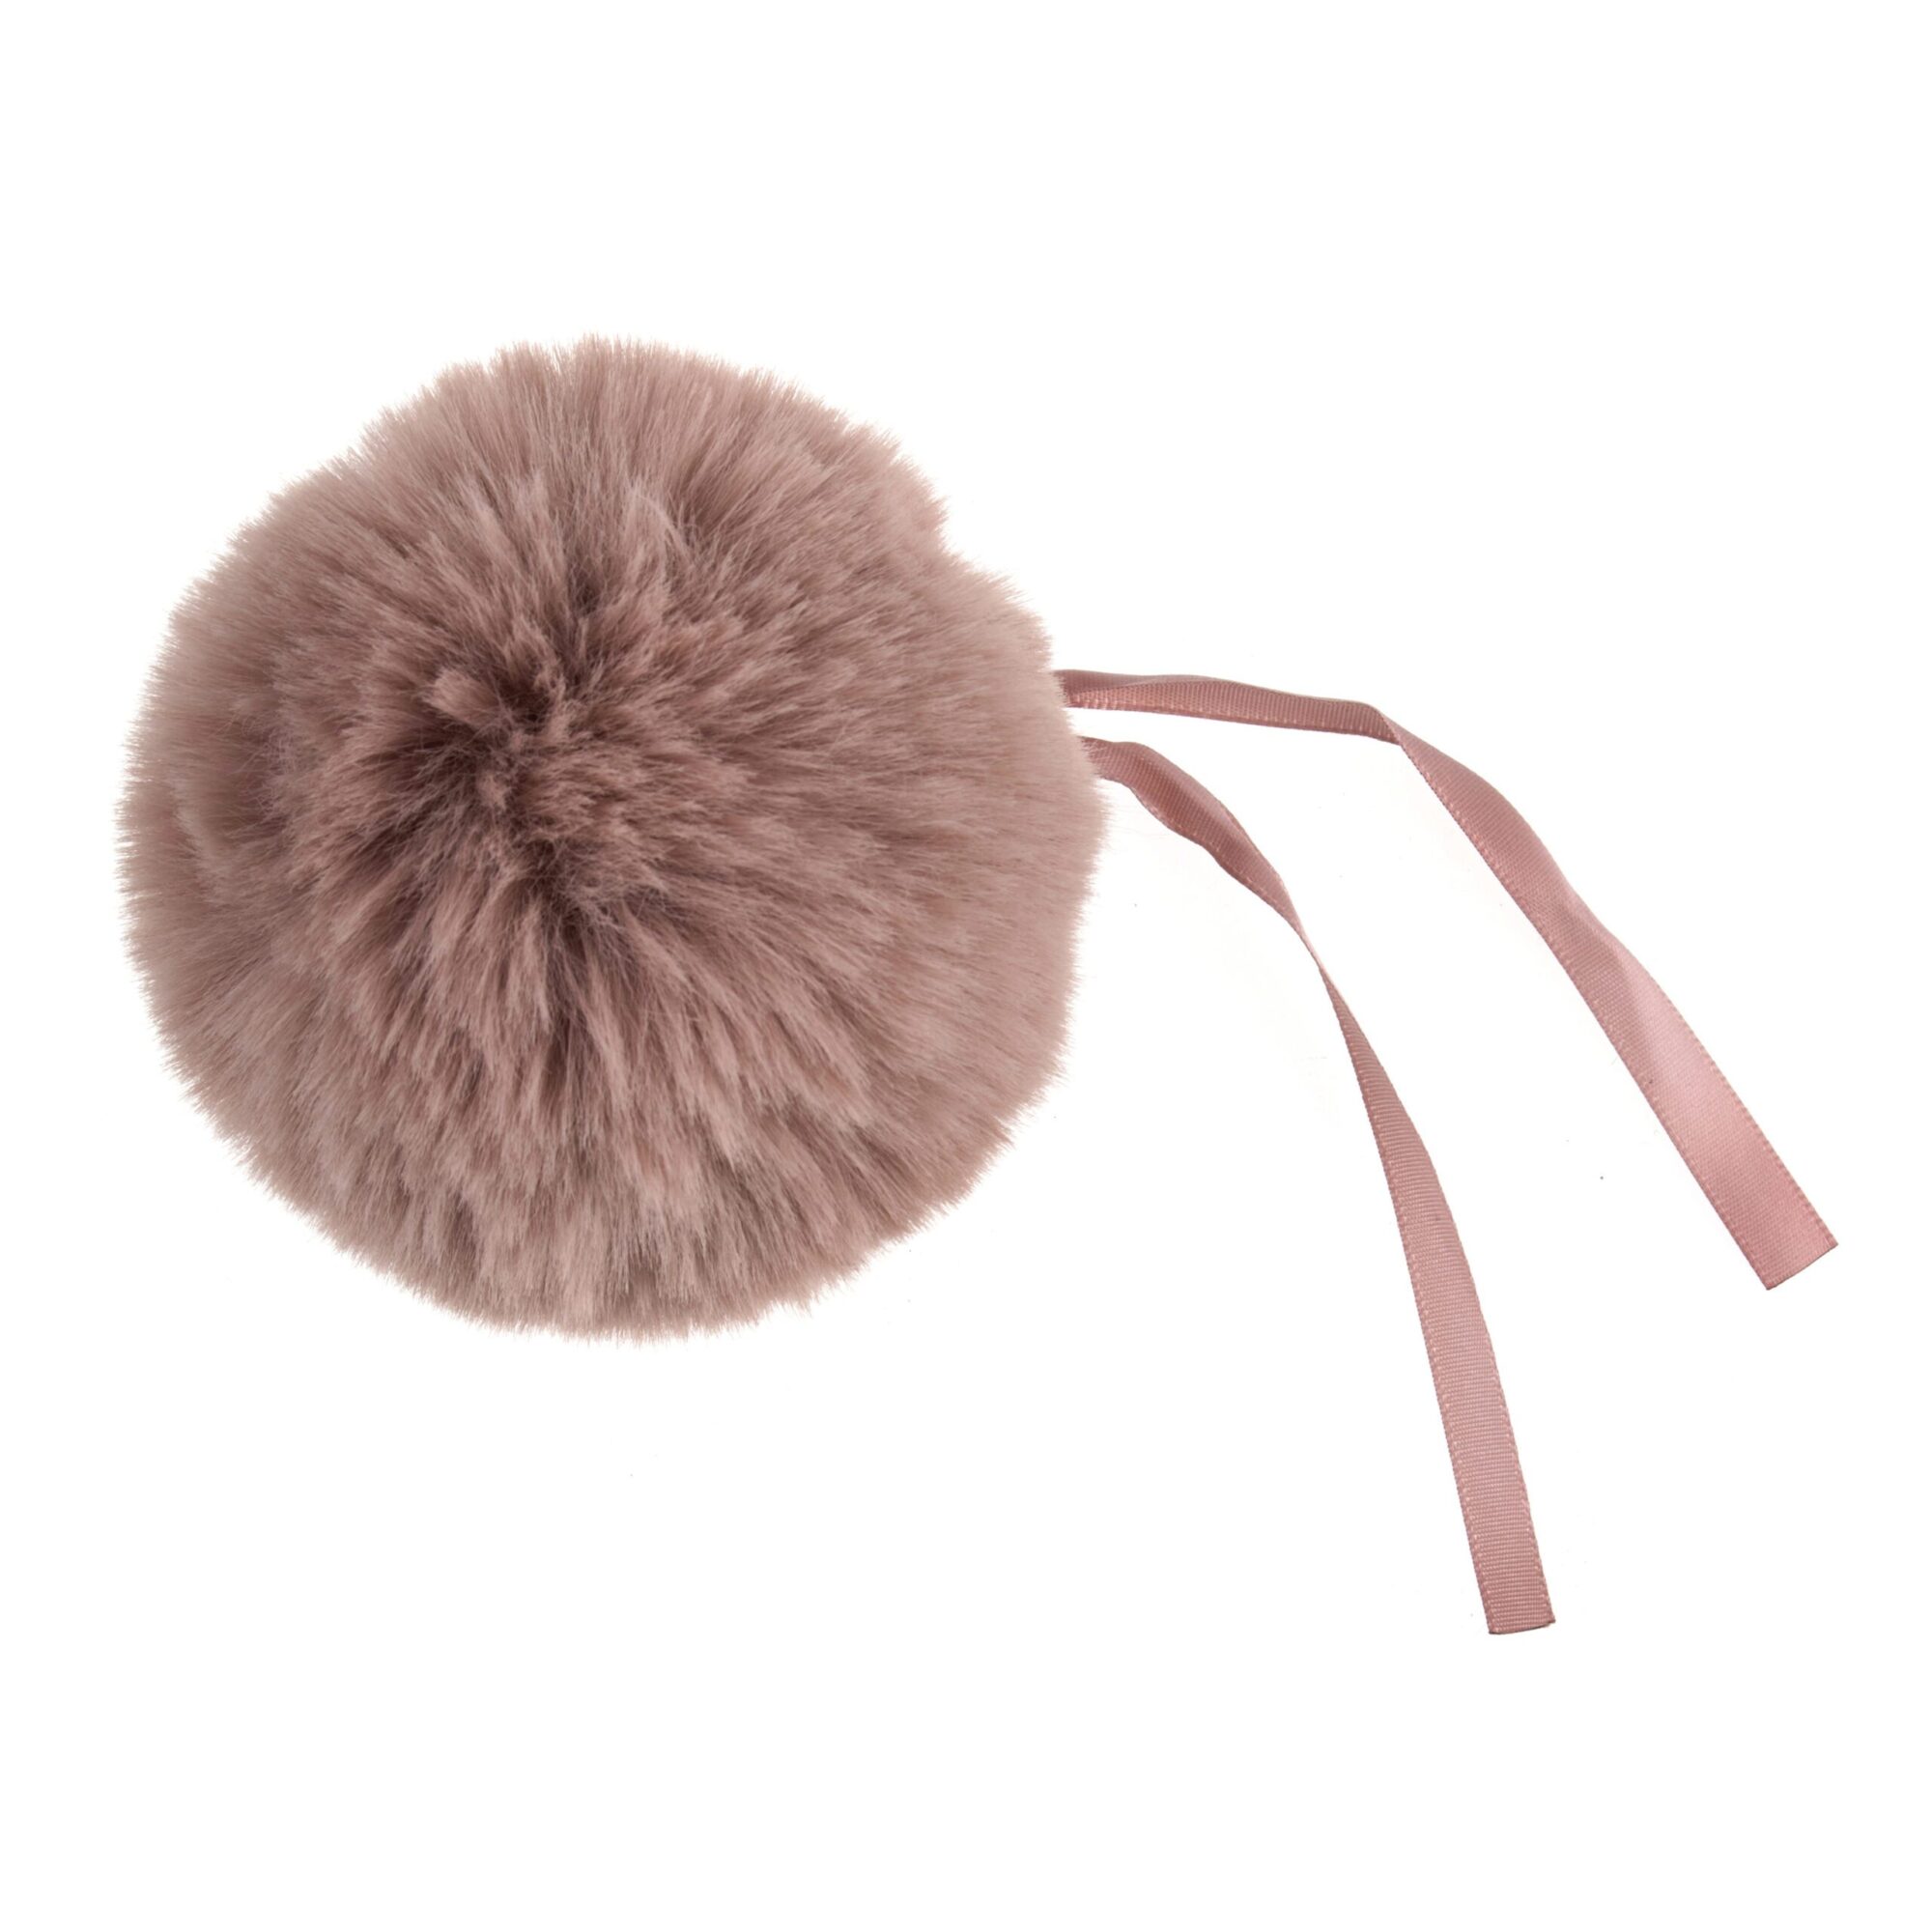 Large Faux Fur Pom Pom 11cm - Pink product image